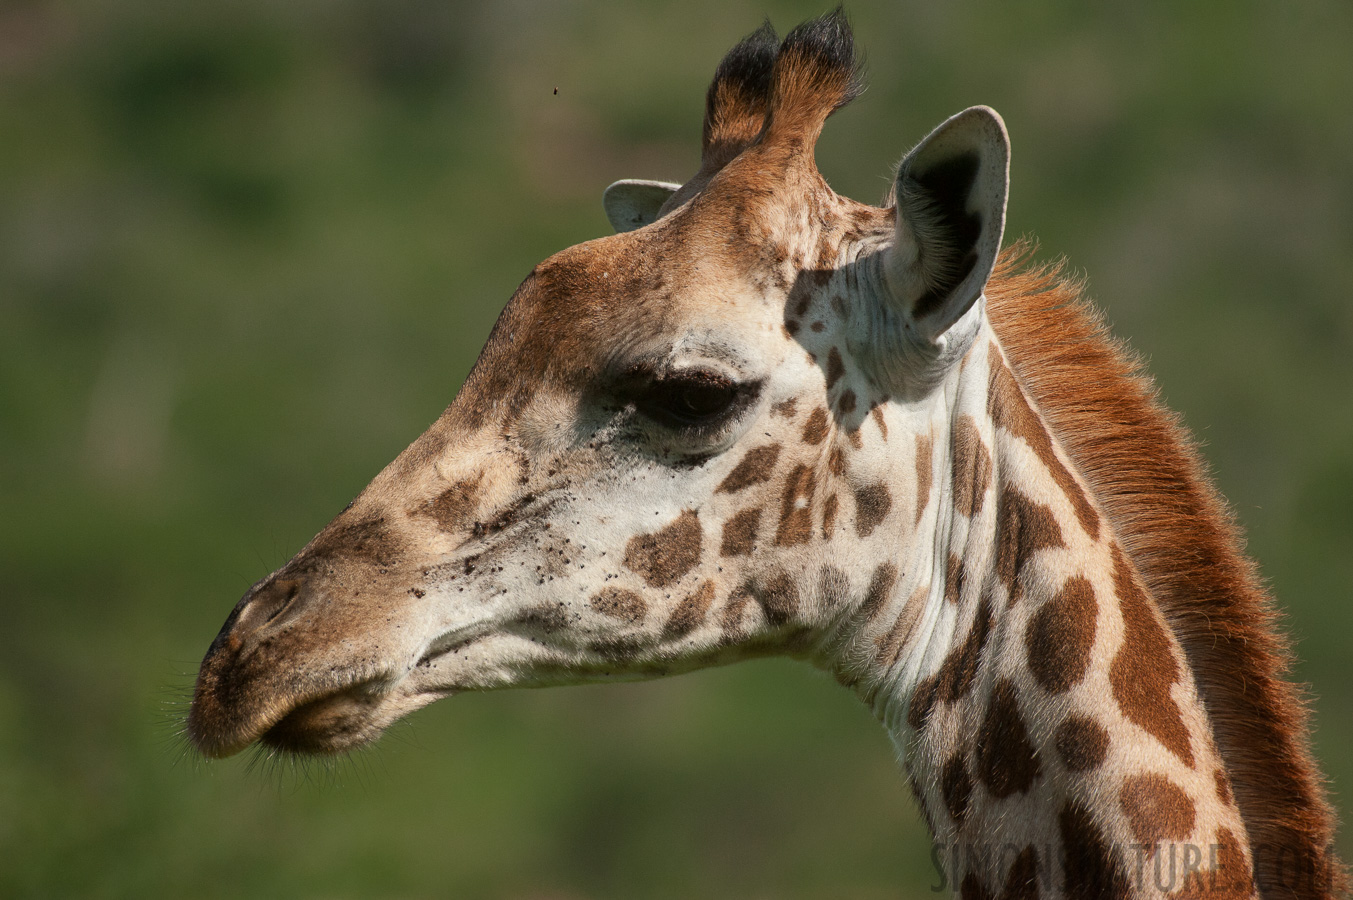 Giraffa tippelskirchi [550 mm, 1/5000 Sek. bei f / 8.0, ISO 1600]